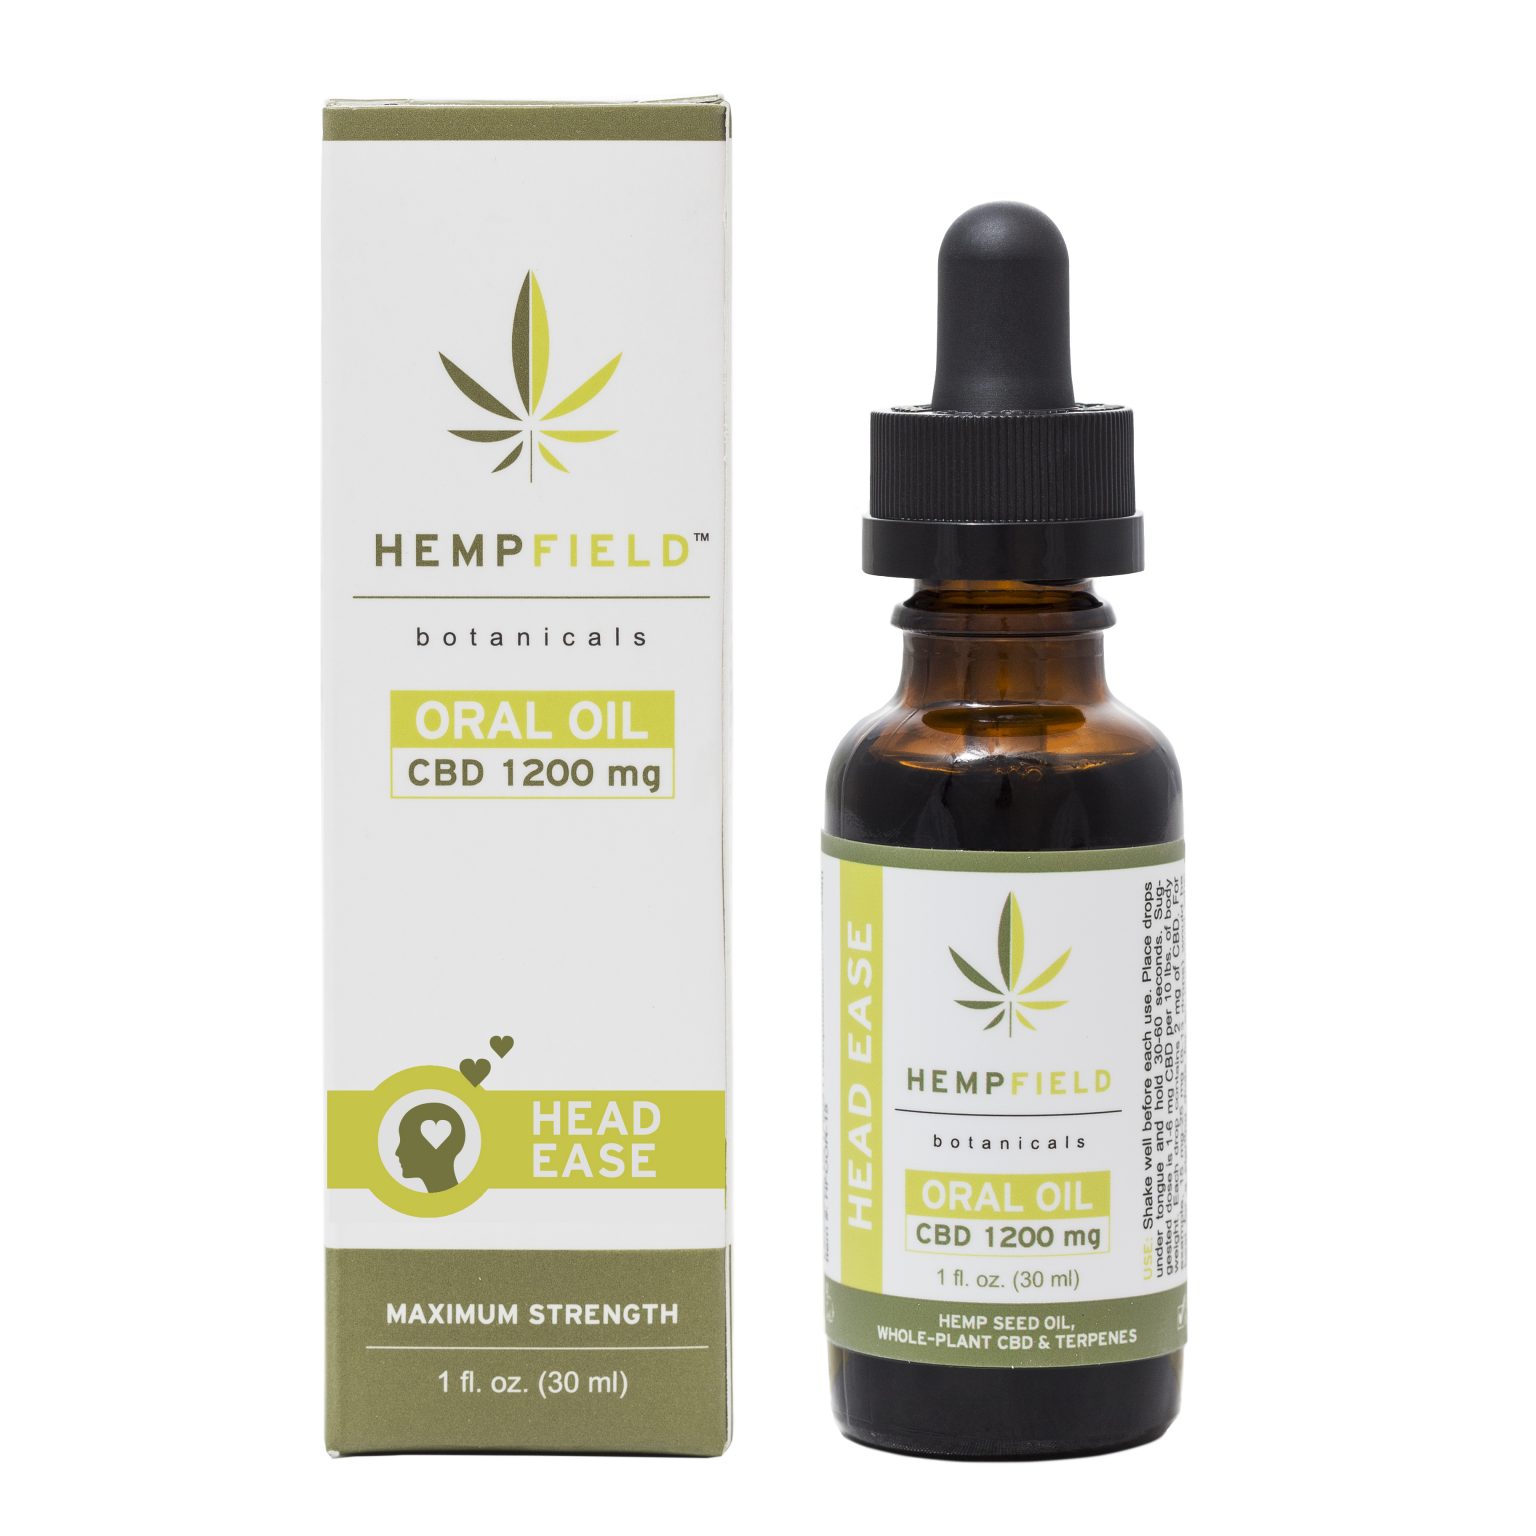 Head Ease CBD Oral Oil | Hempfield Botanicals